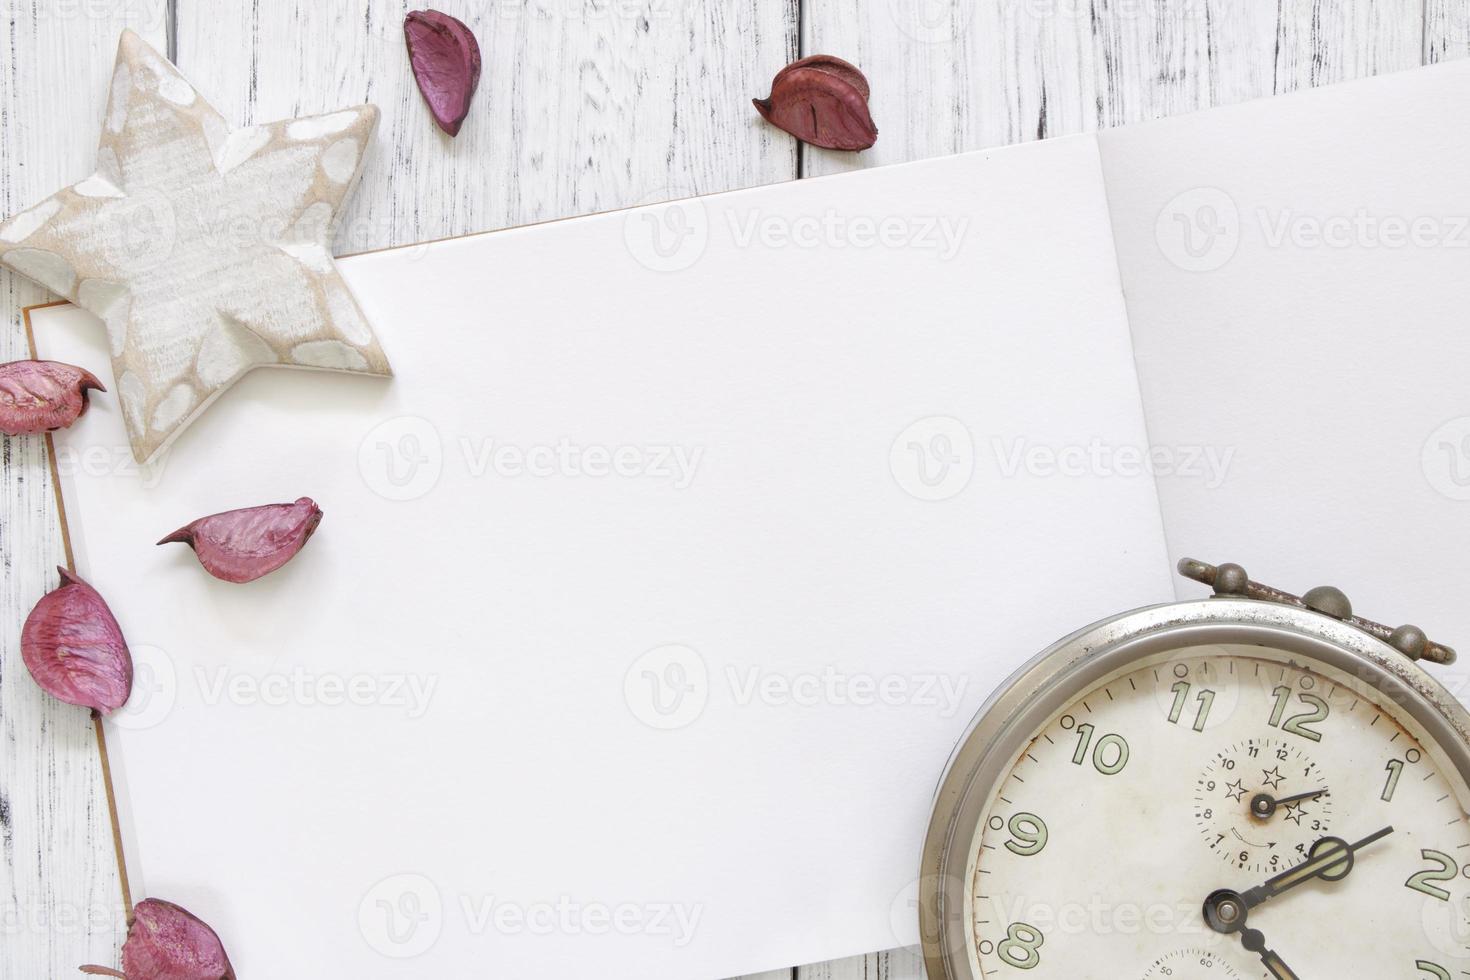 white painted wood table flower petals vintage alarm clock star craft photo